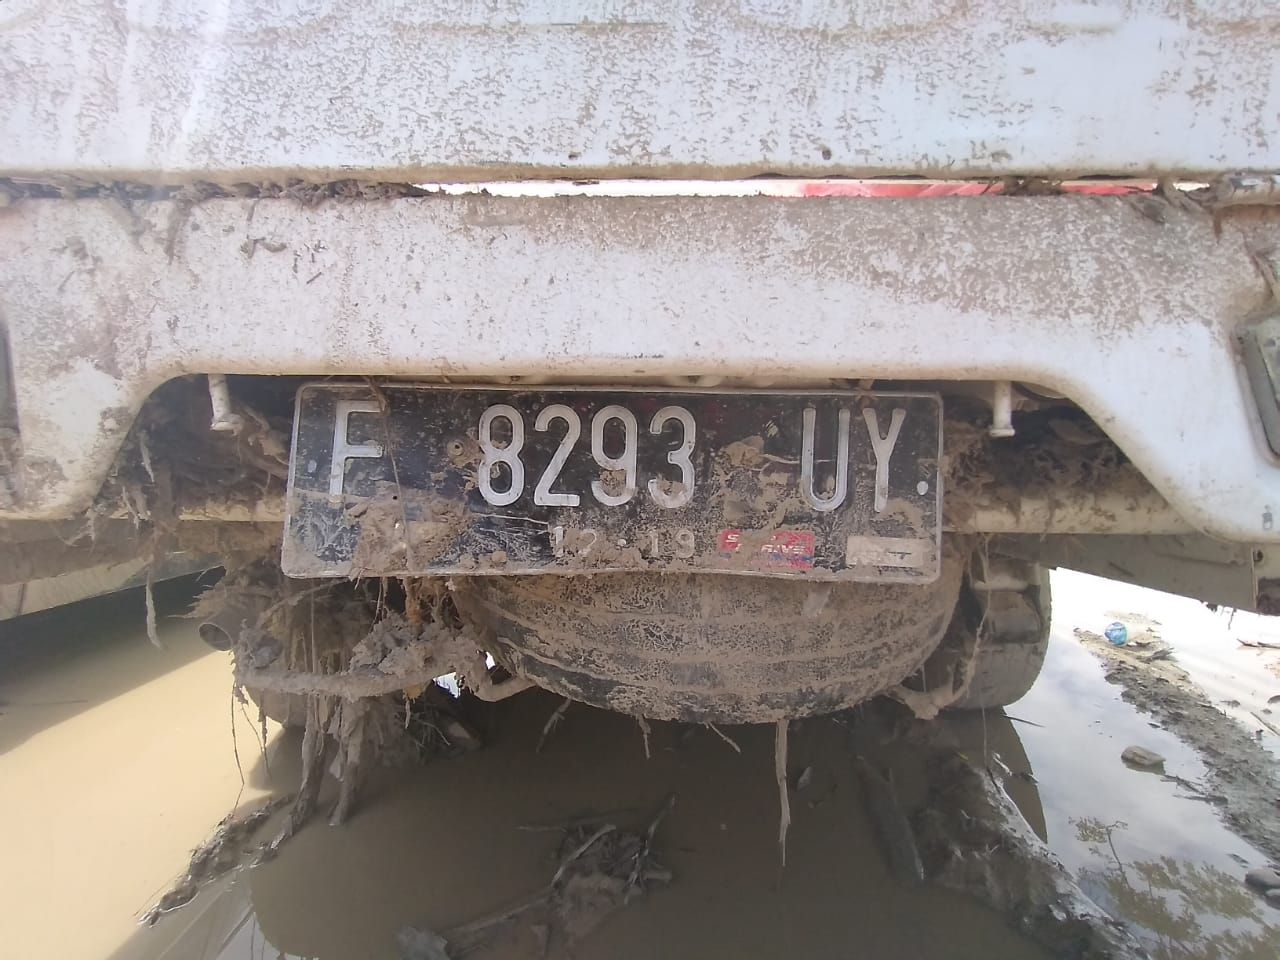 Plat nomor mobil korban banjir Masamba beda